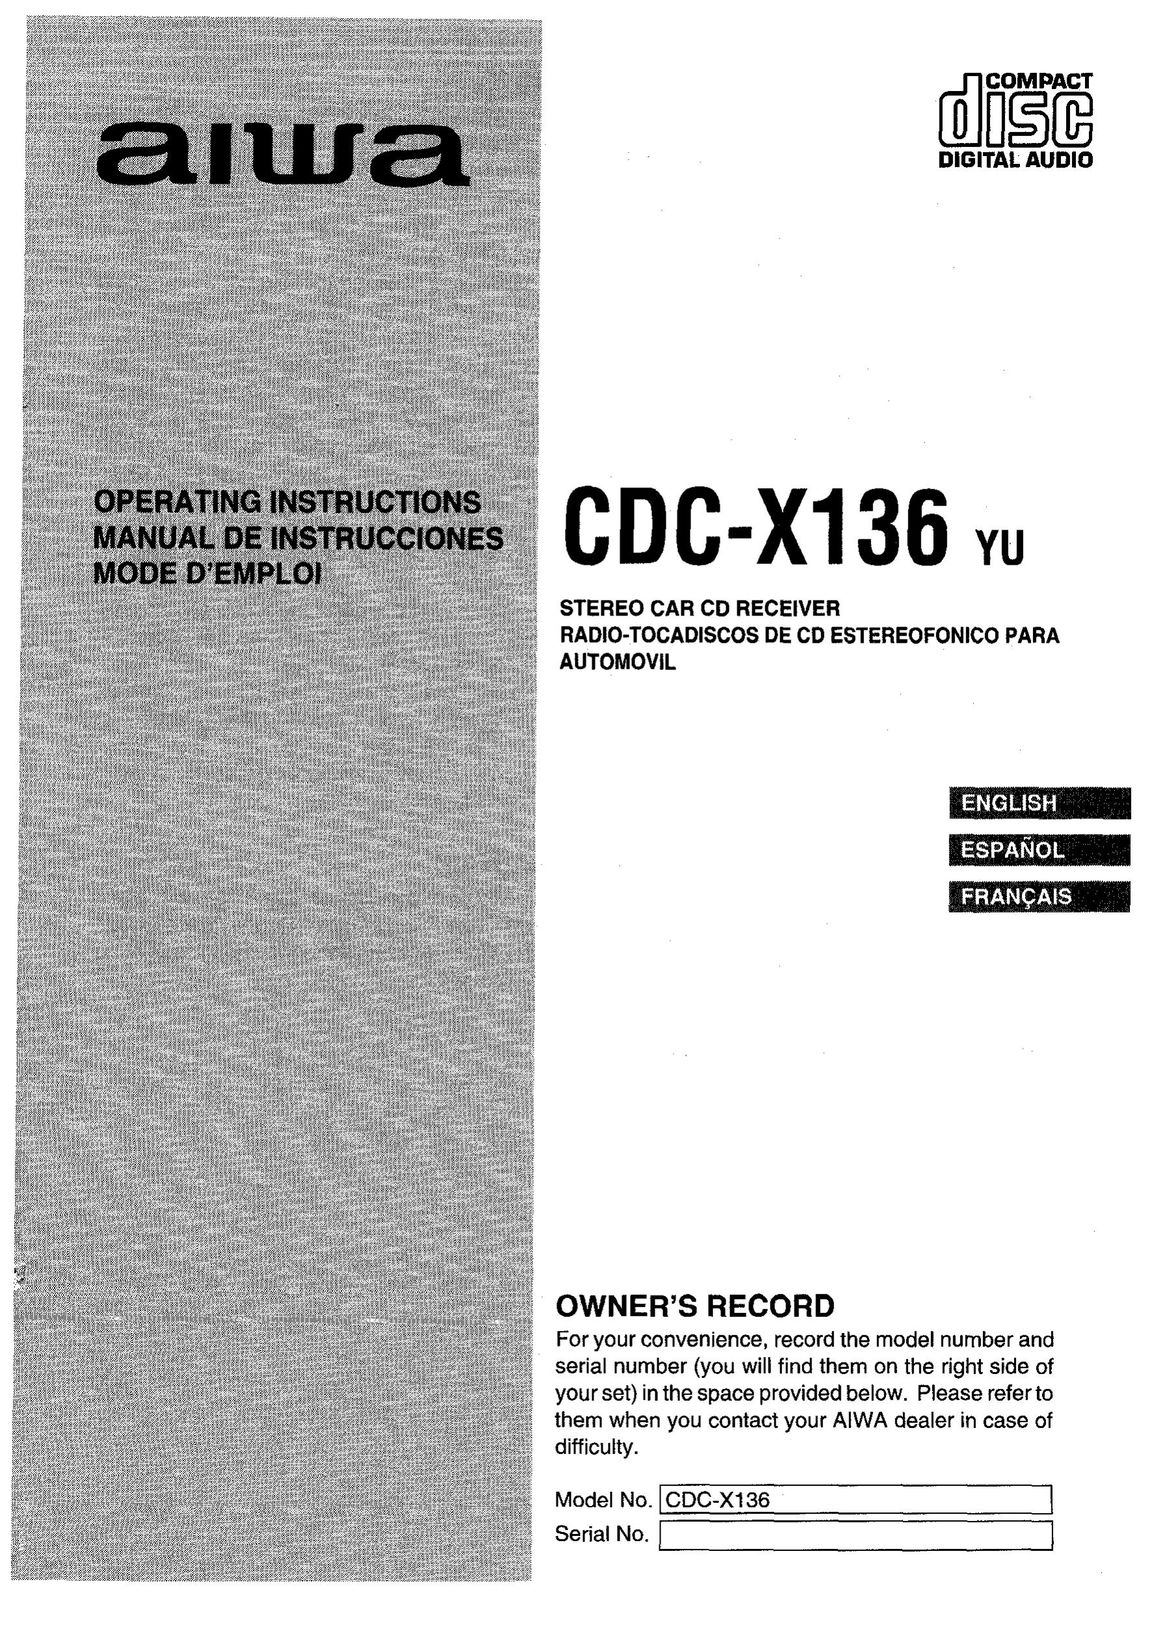 Aiwa CDC-X136 Car Stereo System User Manual